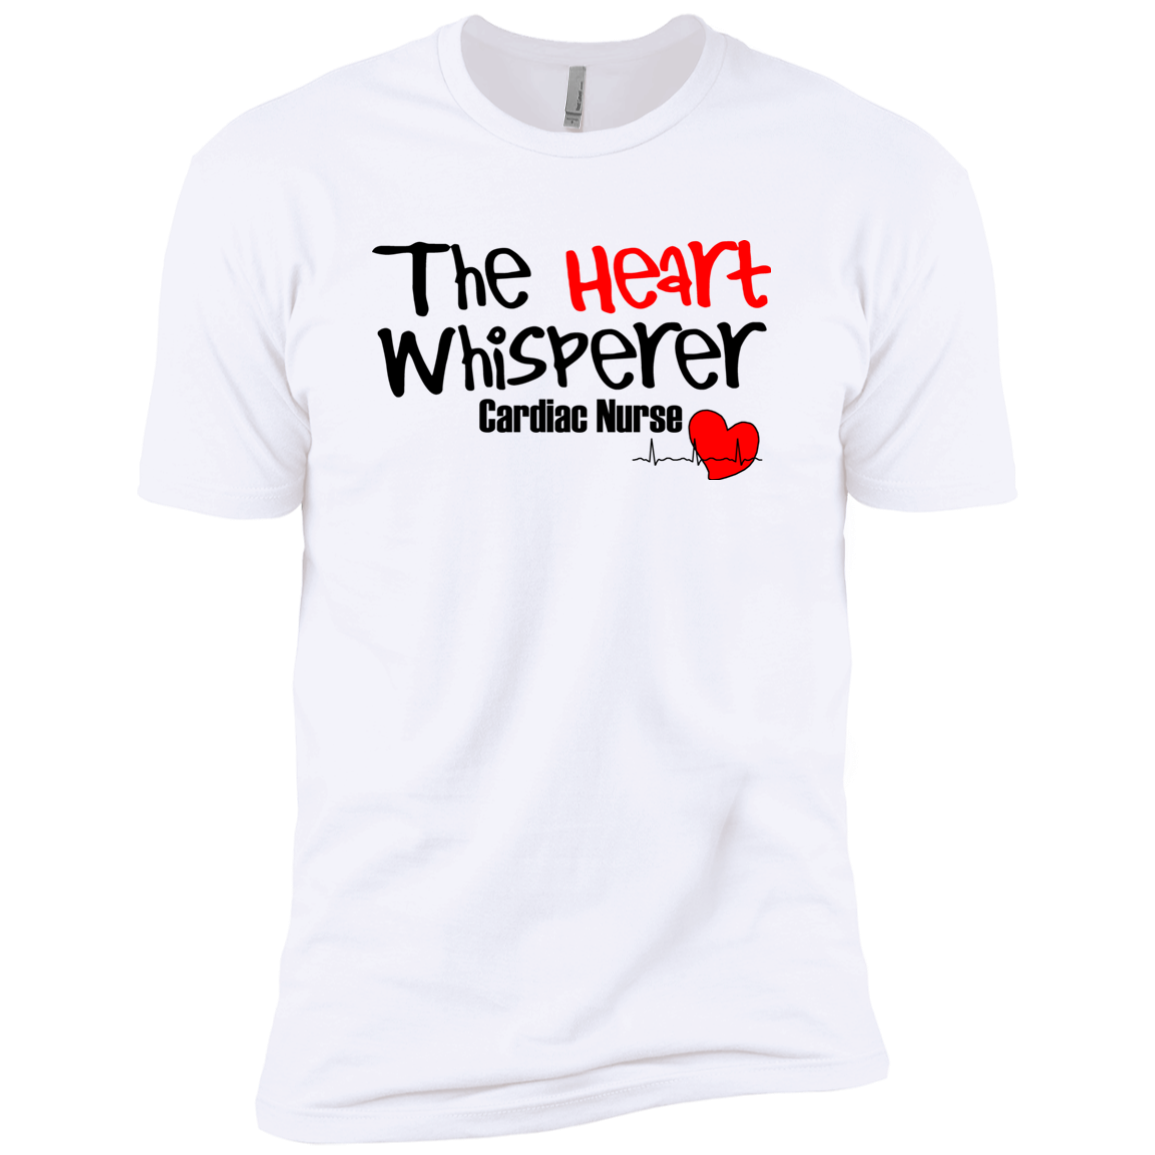 The Heart Whisperer Cardiac Nurse